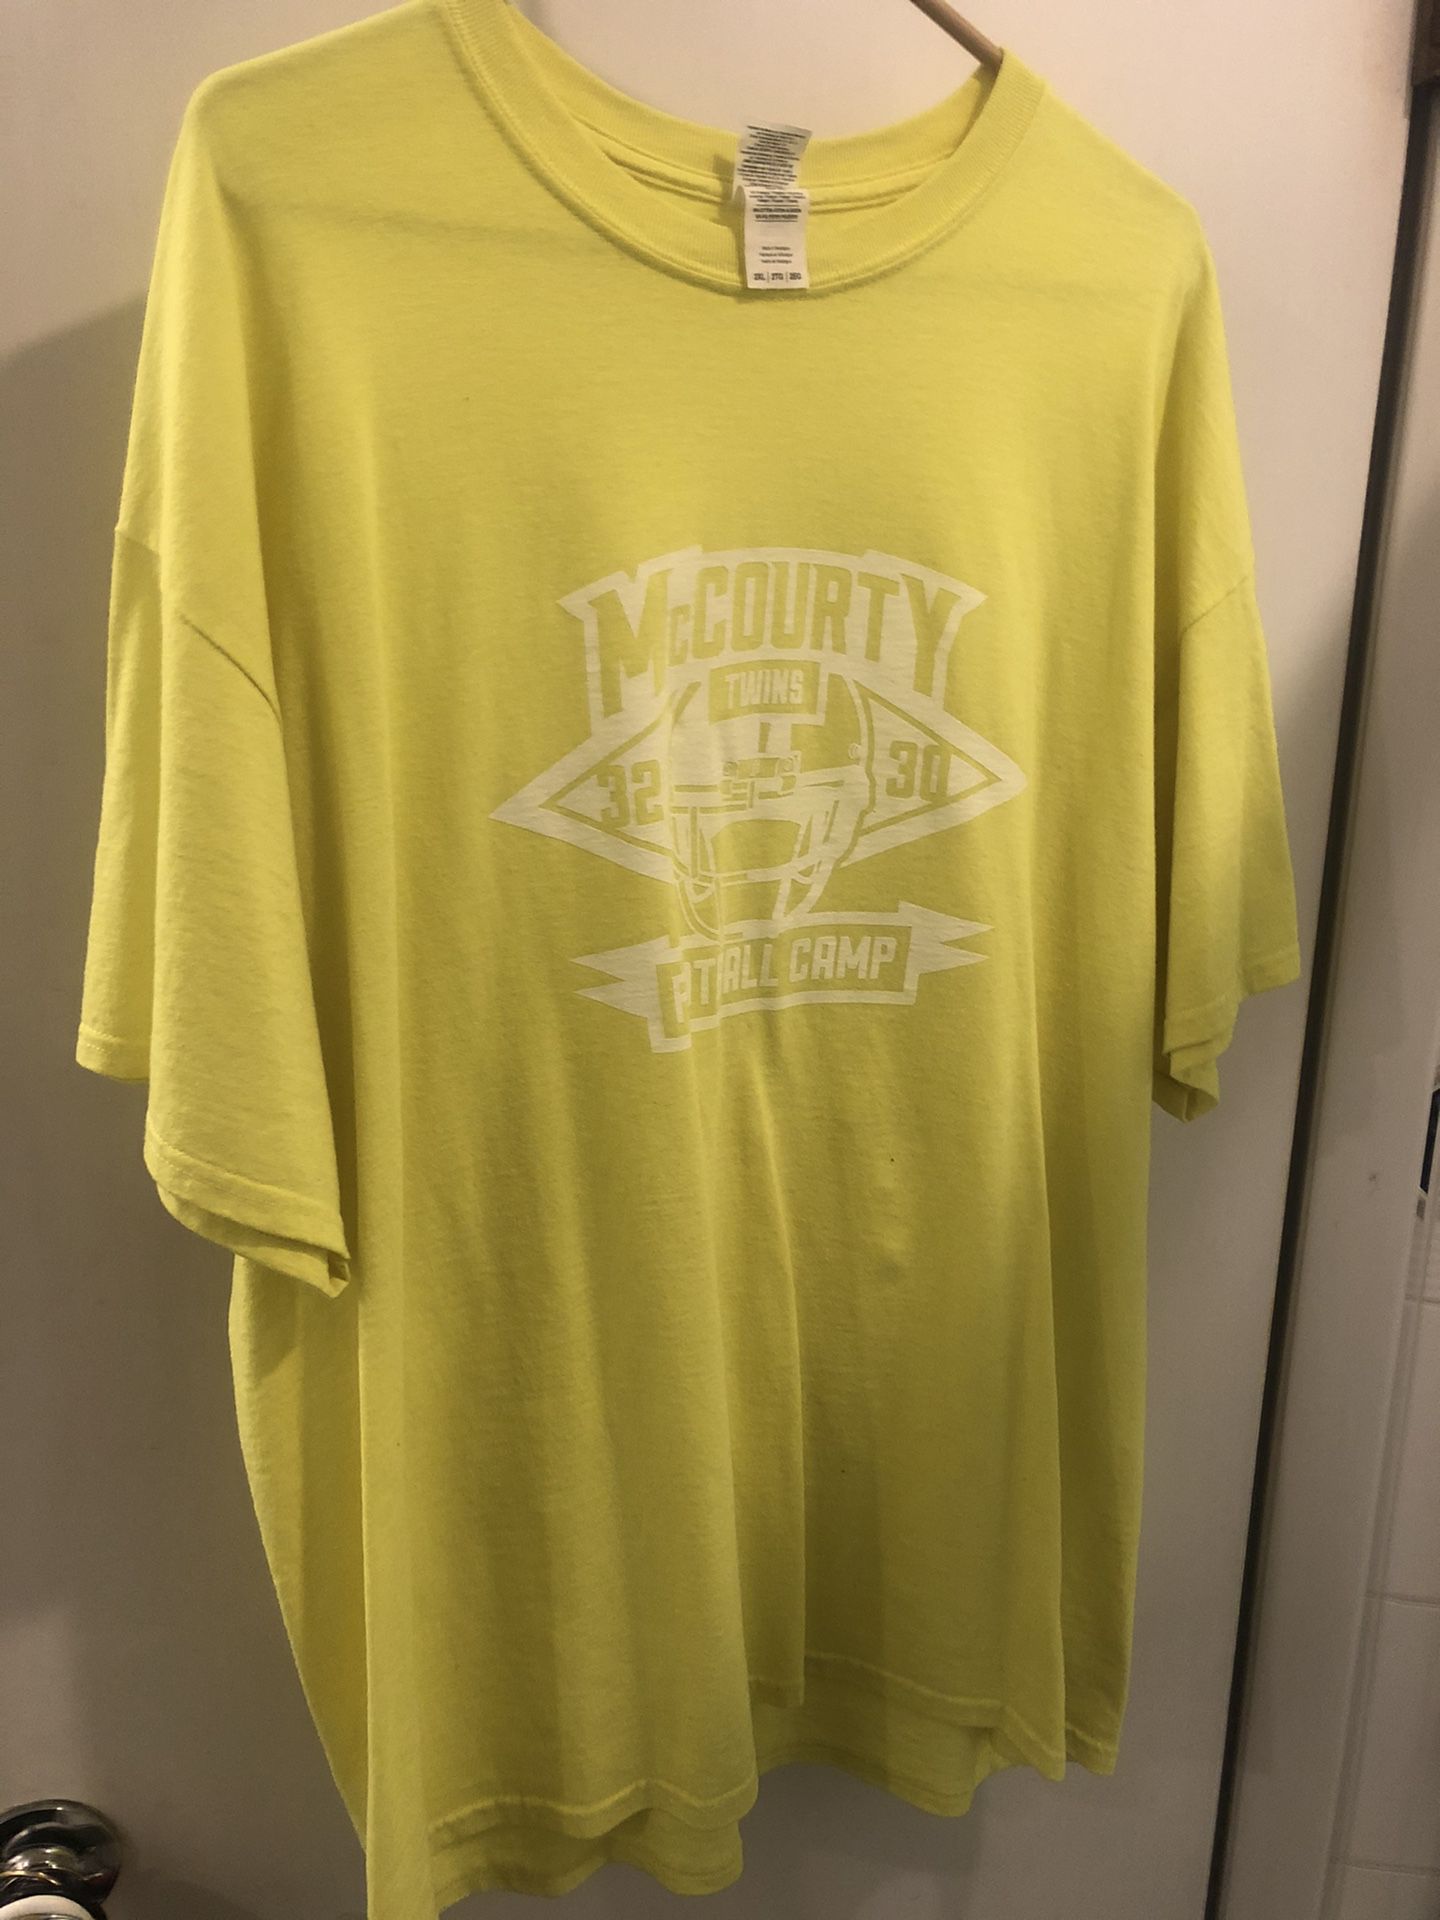 Mccourty Twins NJ Football Legends Training Camp Shirt Size 2XL